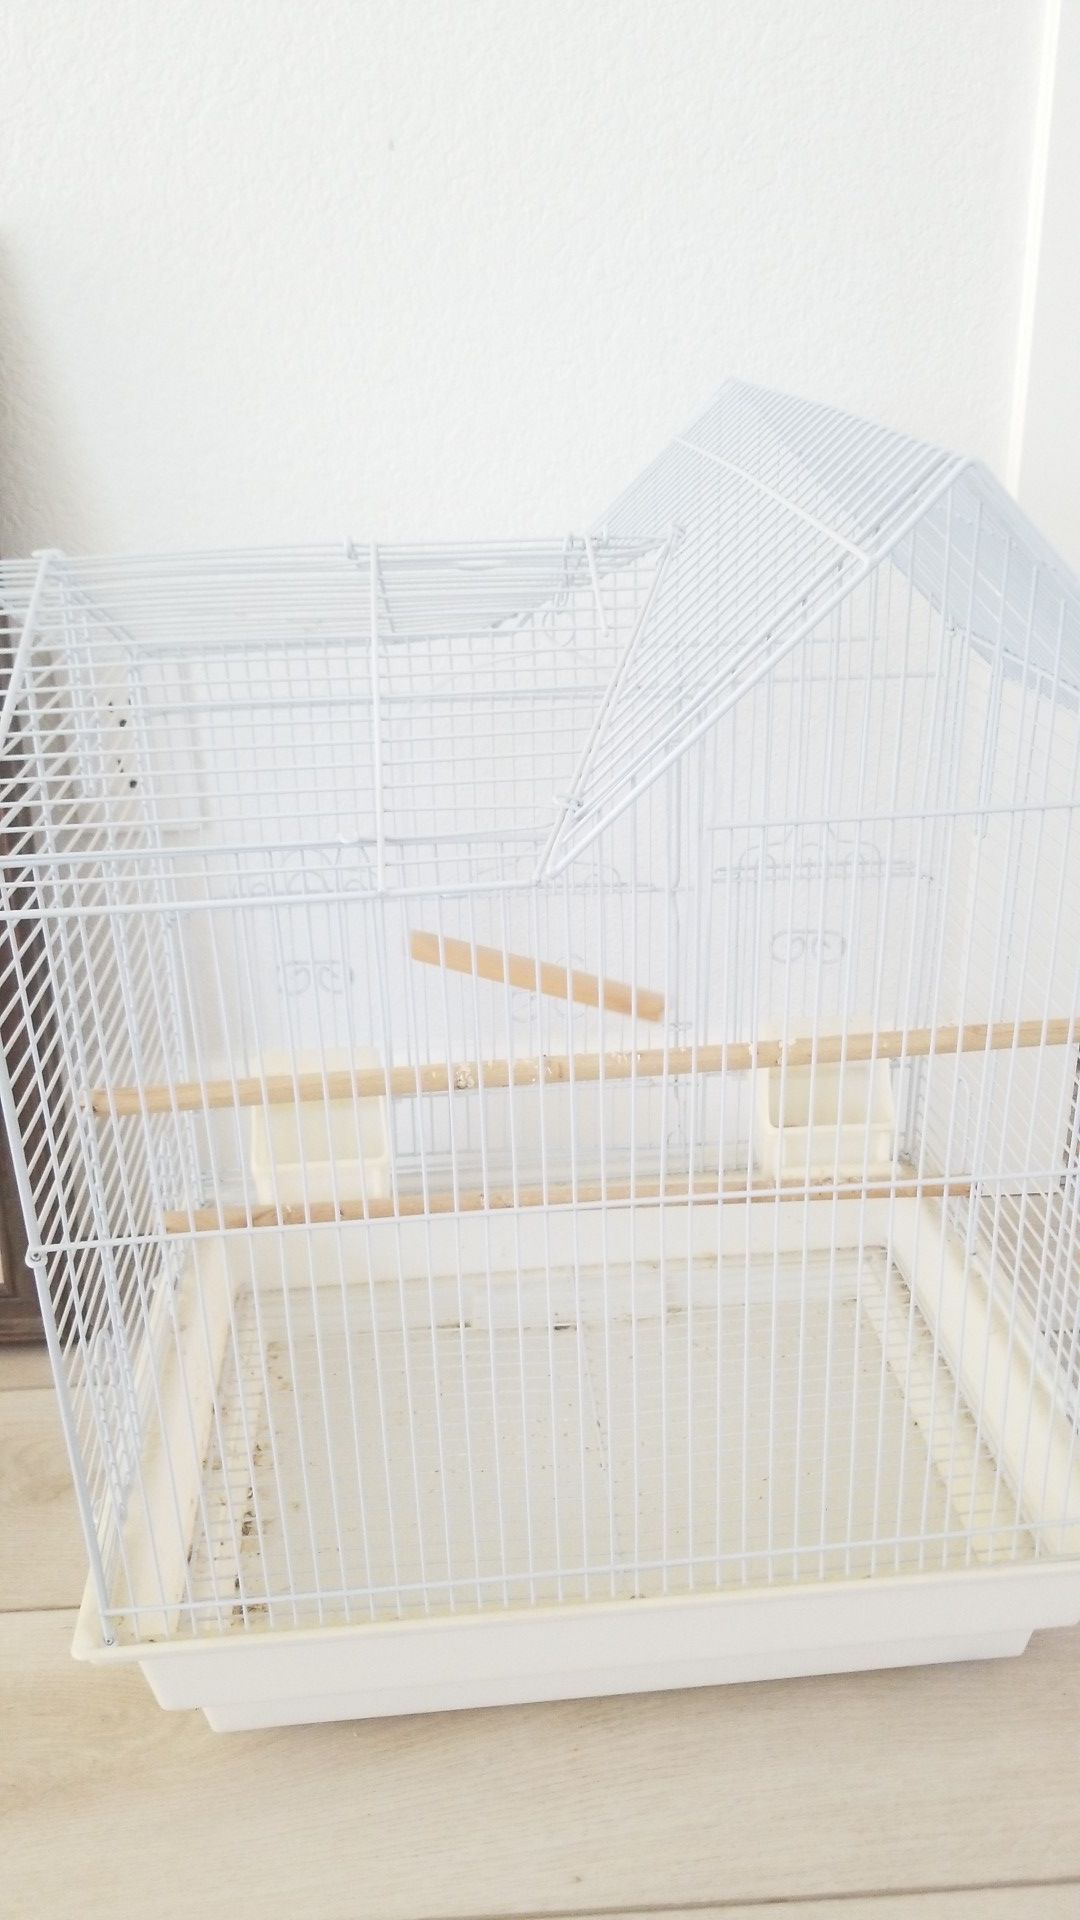 New bird cage.